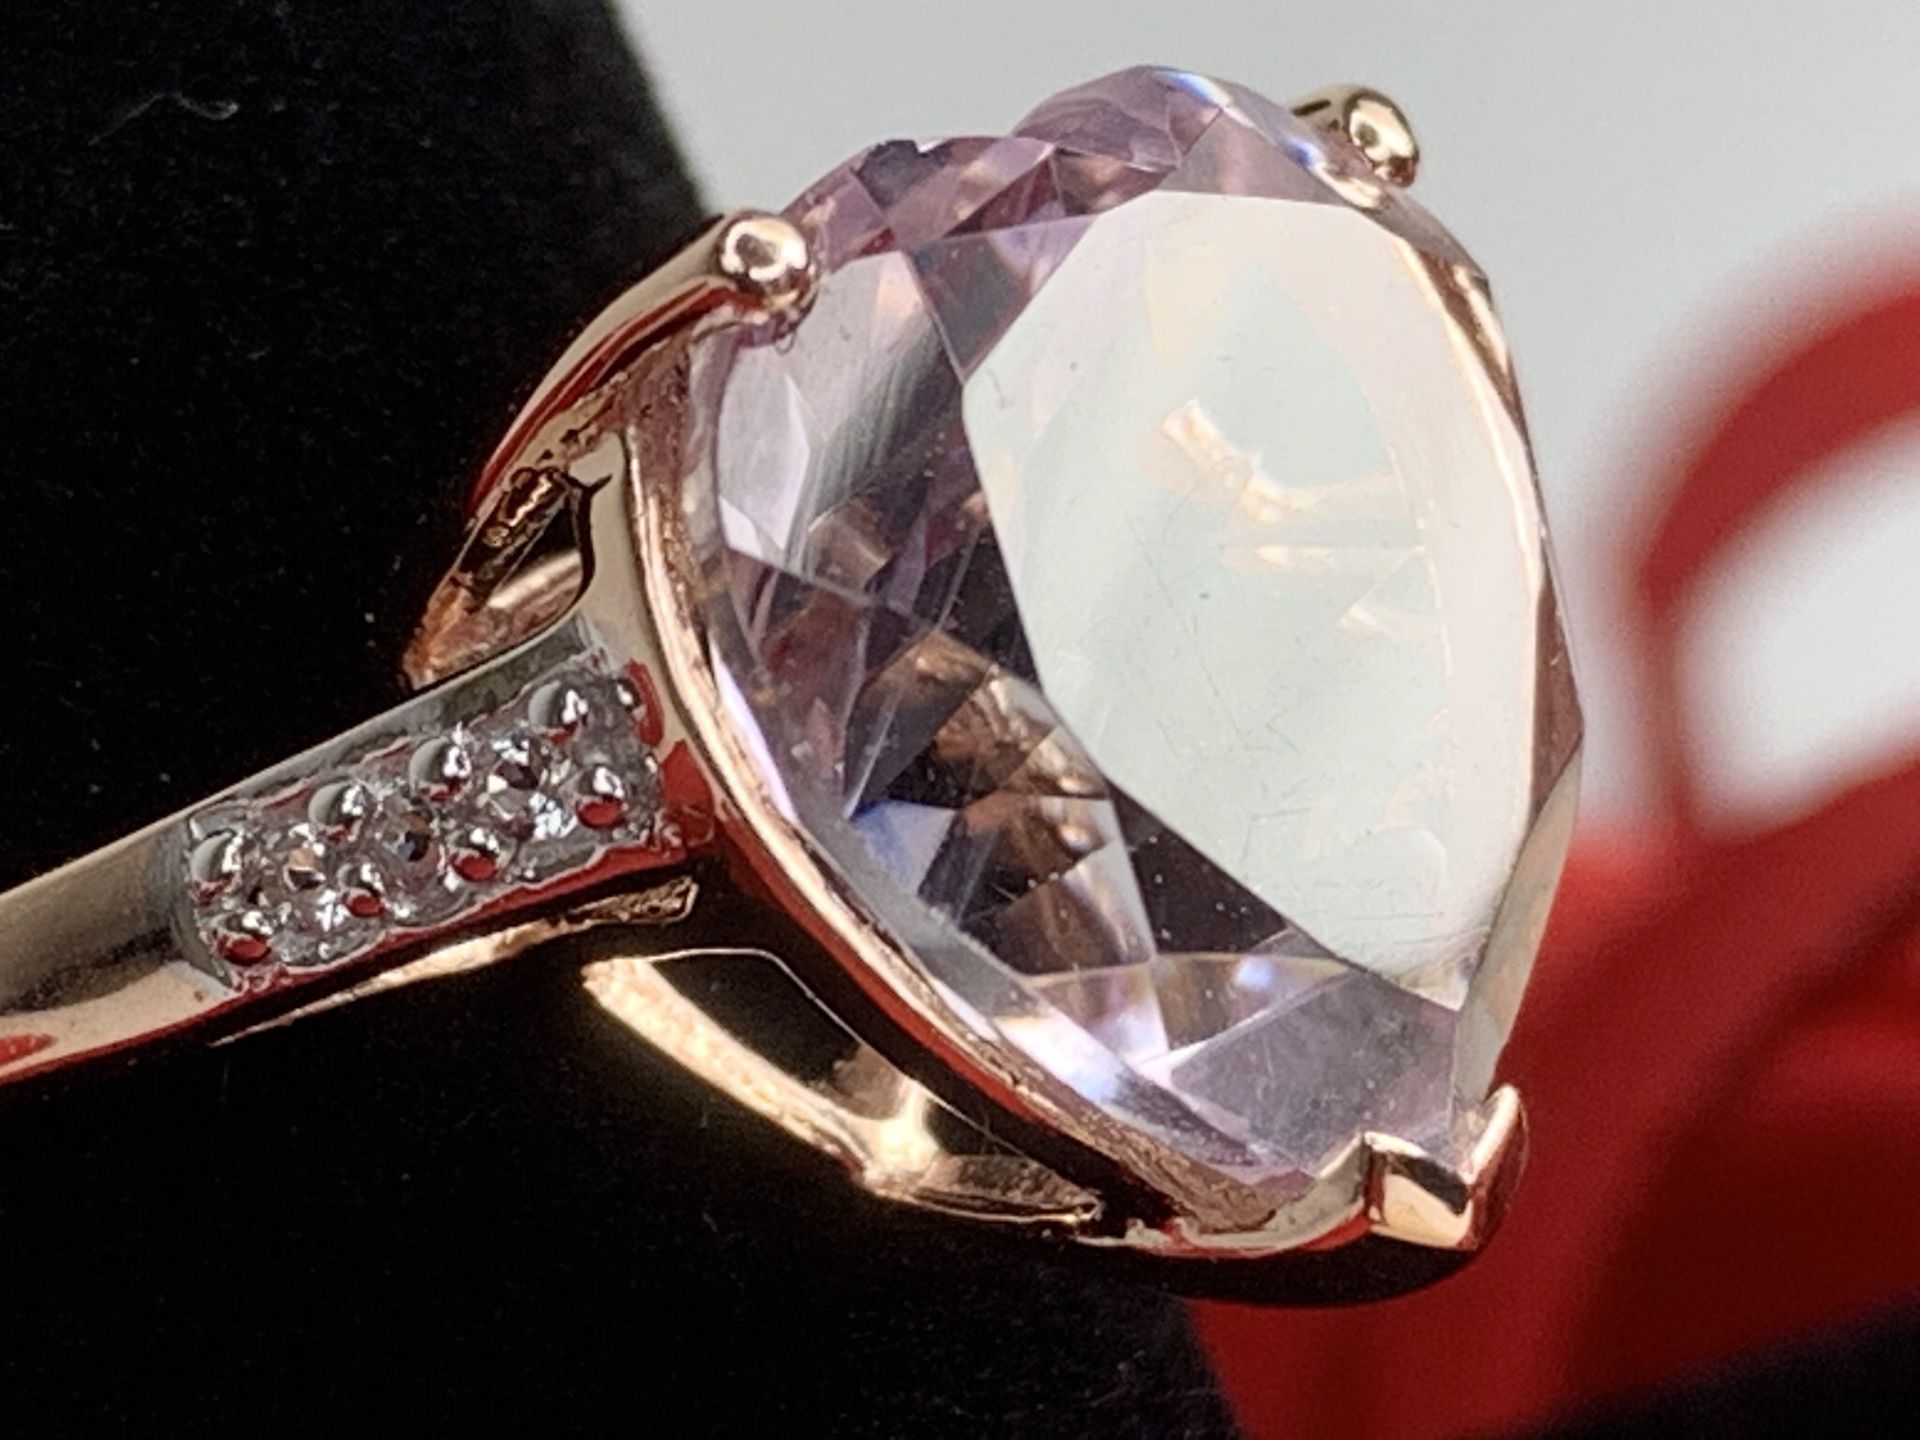 2.42ct Heart Shaped Morganite With Diamond Accents 10k Rose Gold Ring - Morganita en forma de corazón con detalles de diamantes Anillo de 10k oro rosa